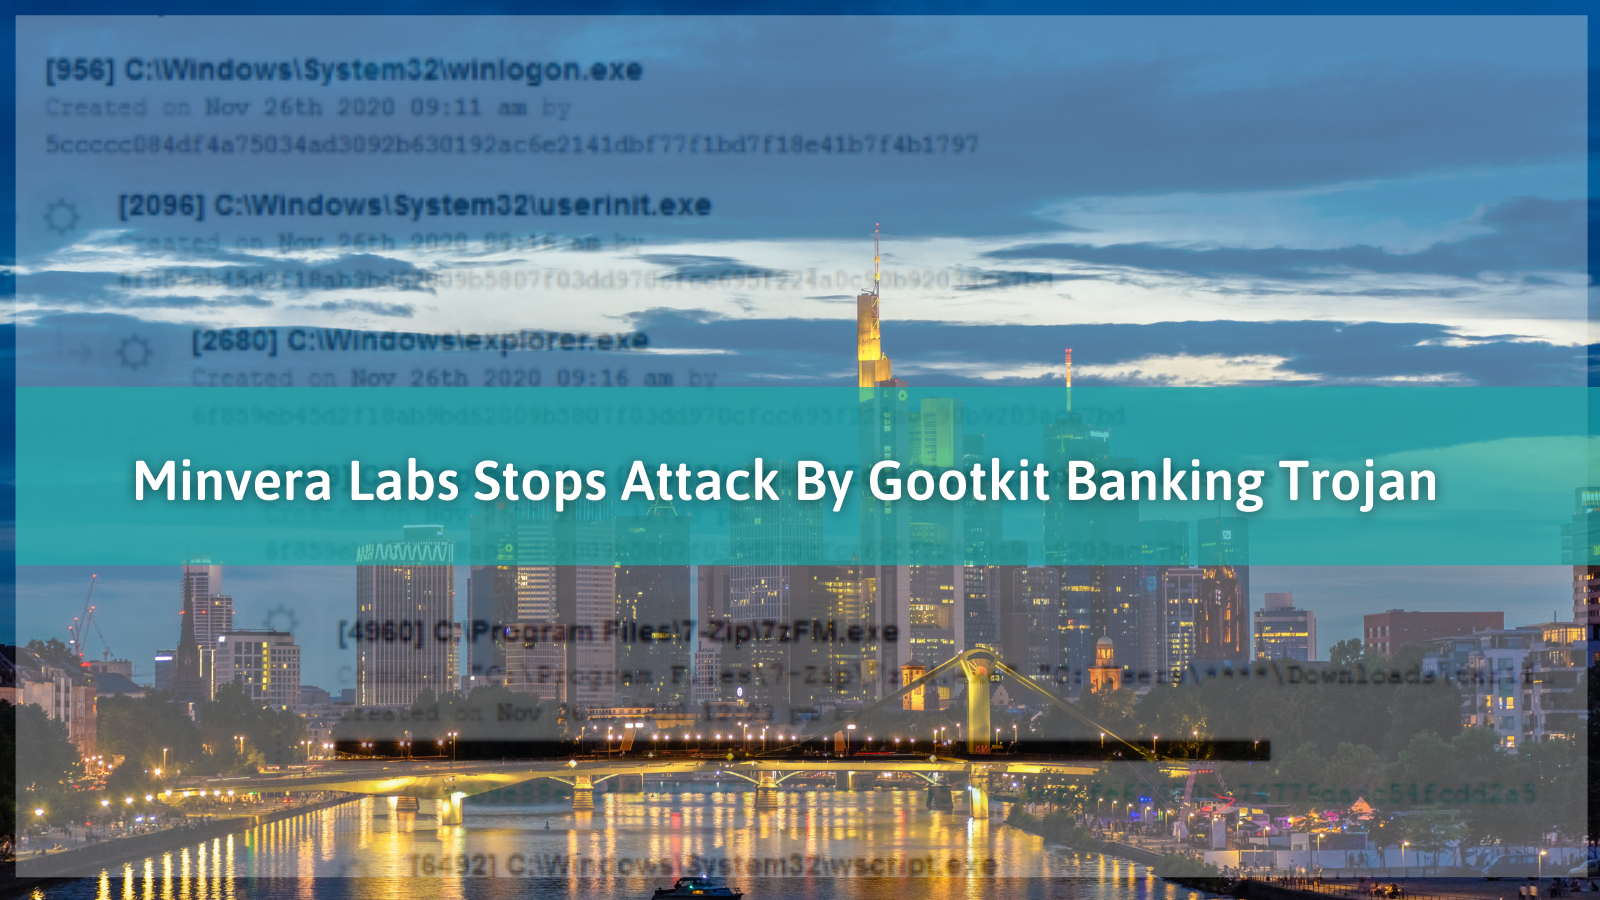 Minerva Labs Stops An Attack By Gootkit Banking Trojan